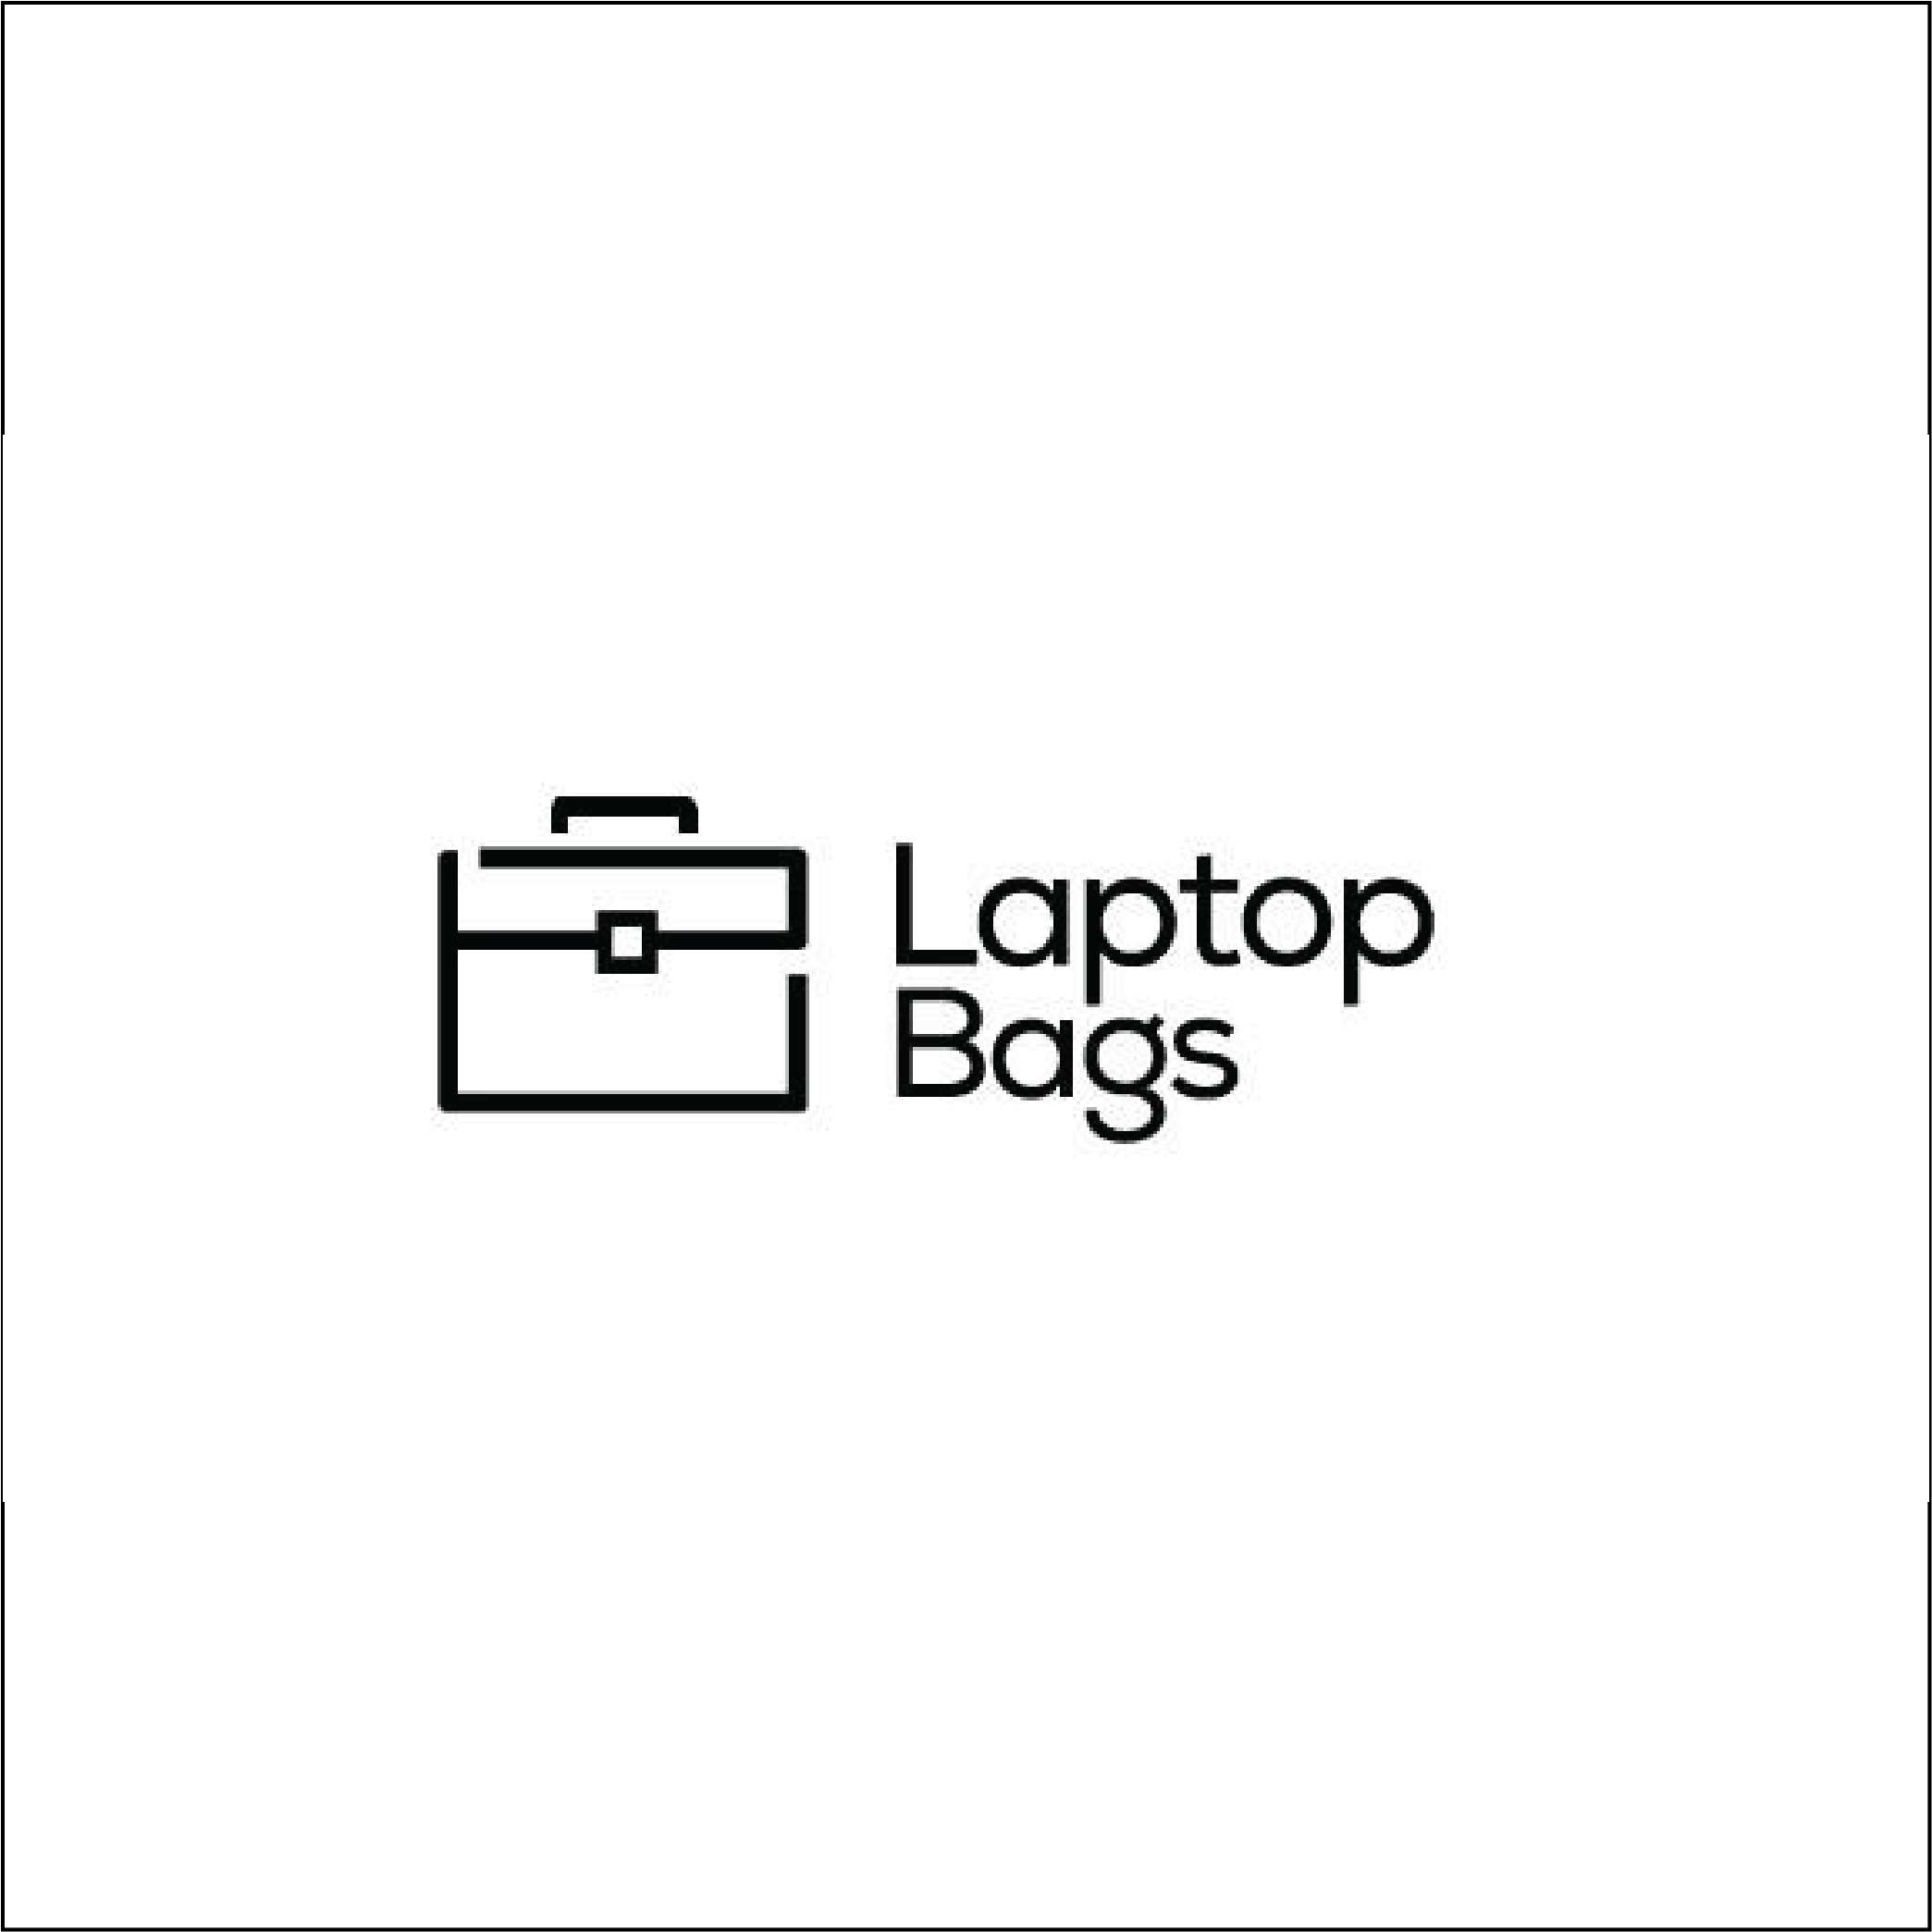 Male Laptop Bag Profile Picture